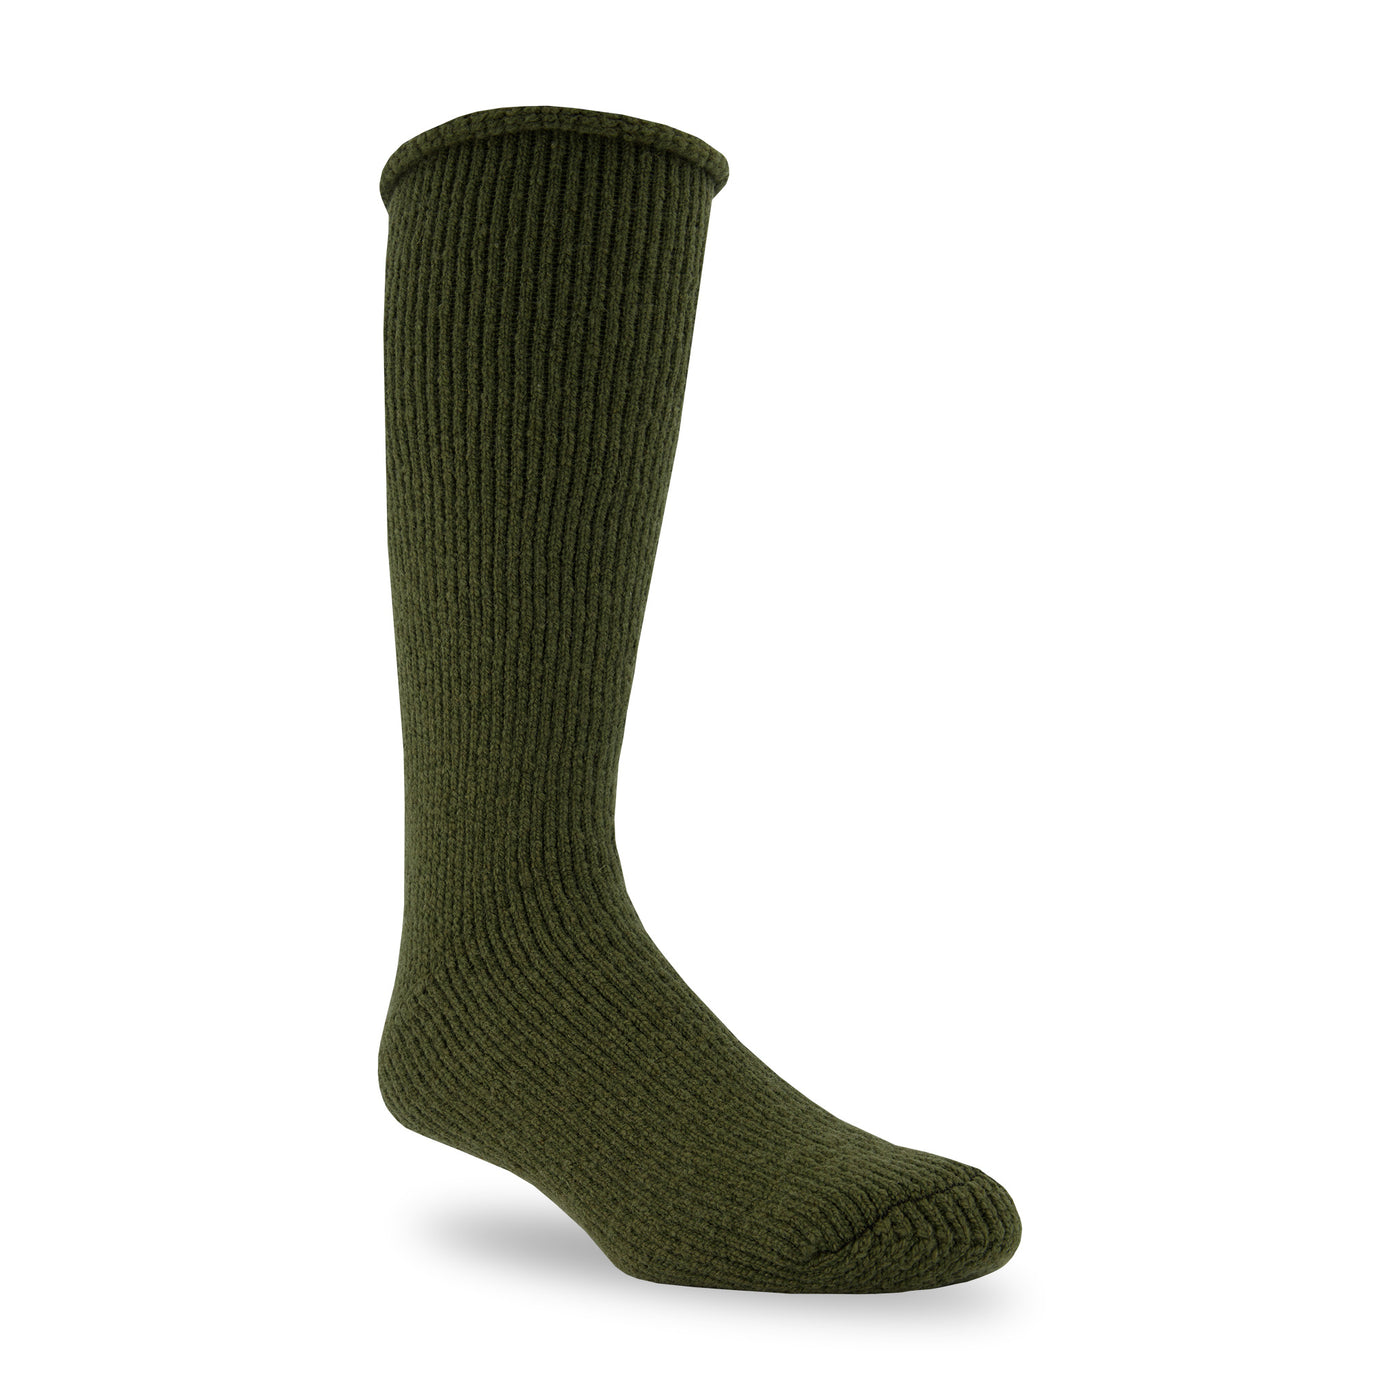 Green Thermal Socks